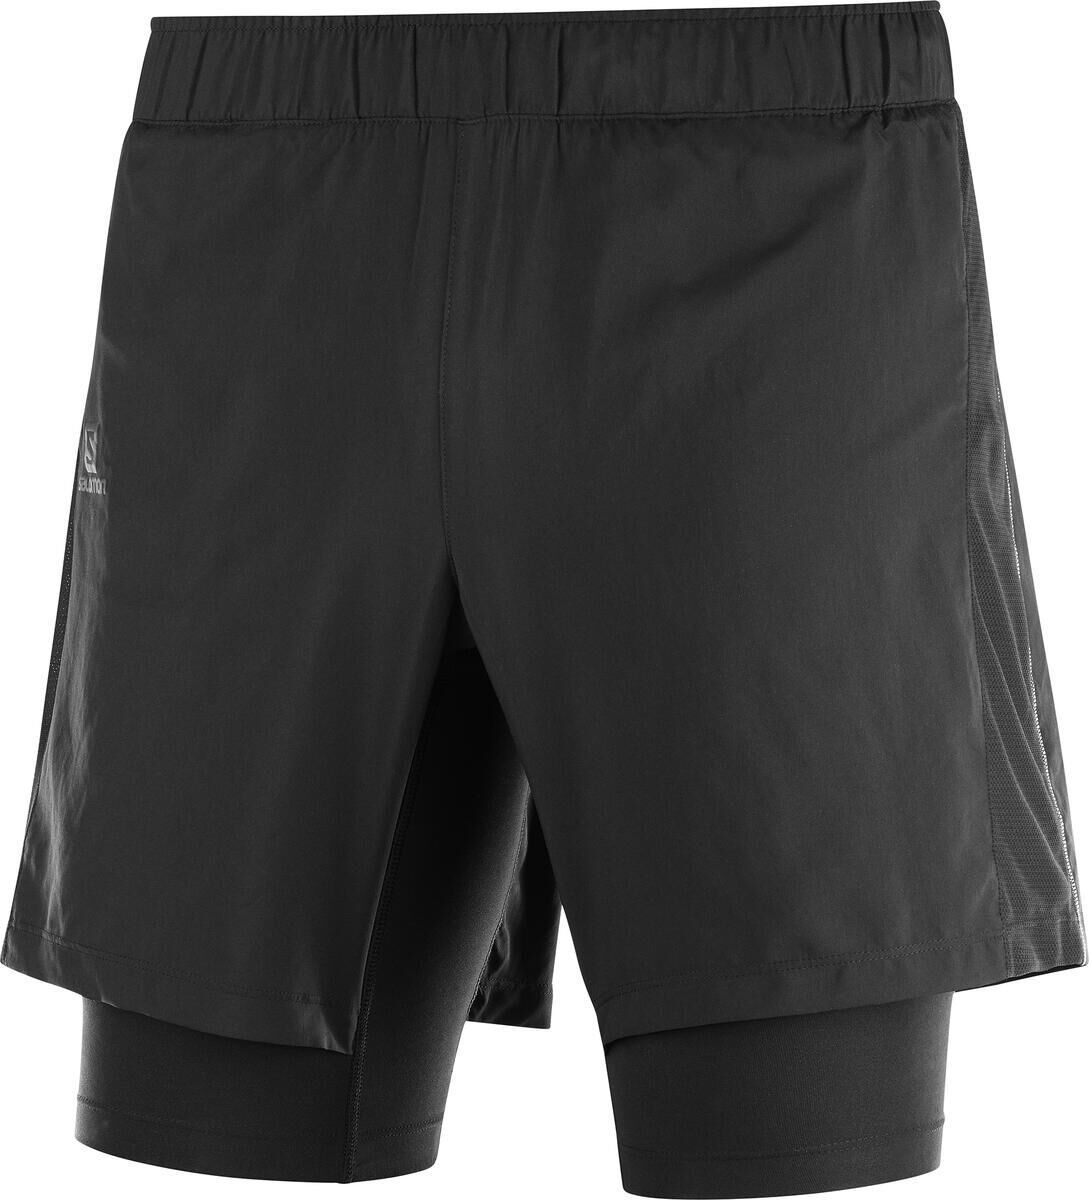 Salomon Agile Twinskin Short - Running shorts - Men's